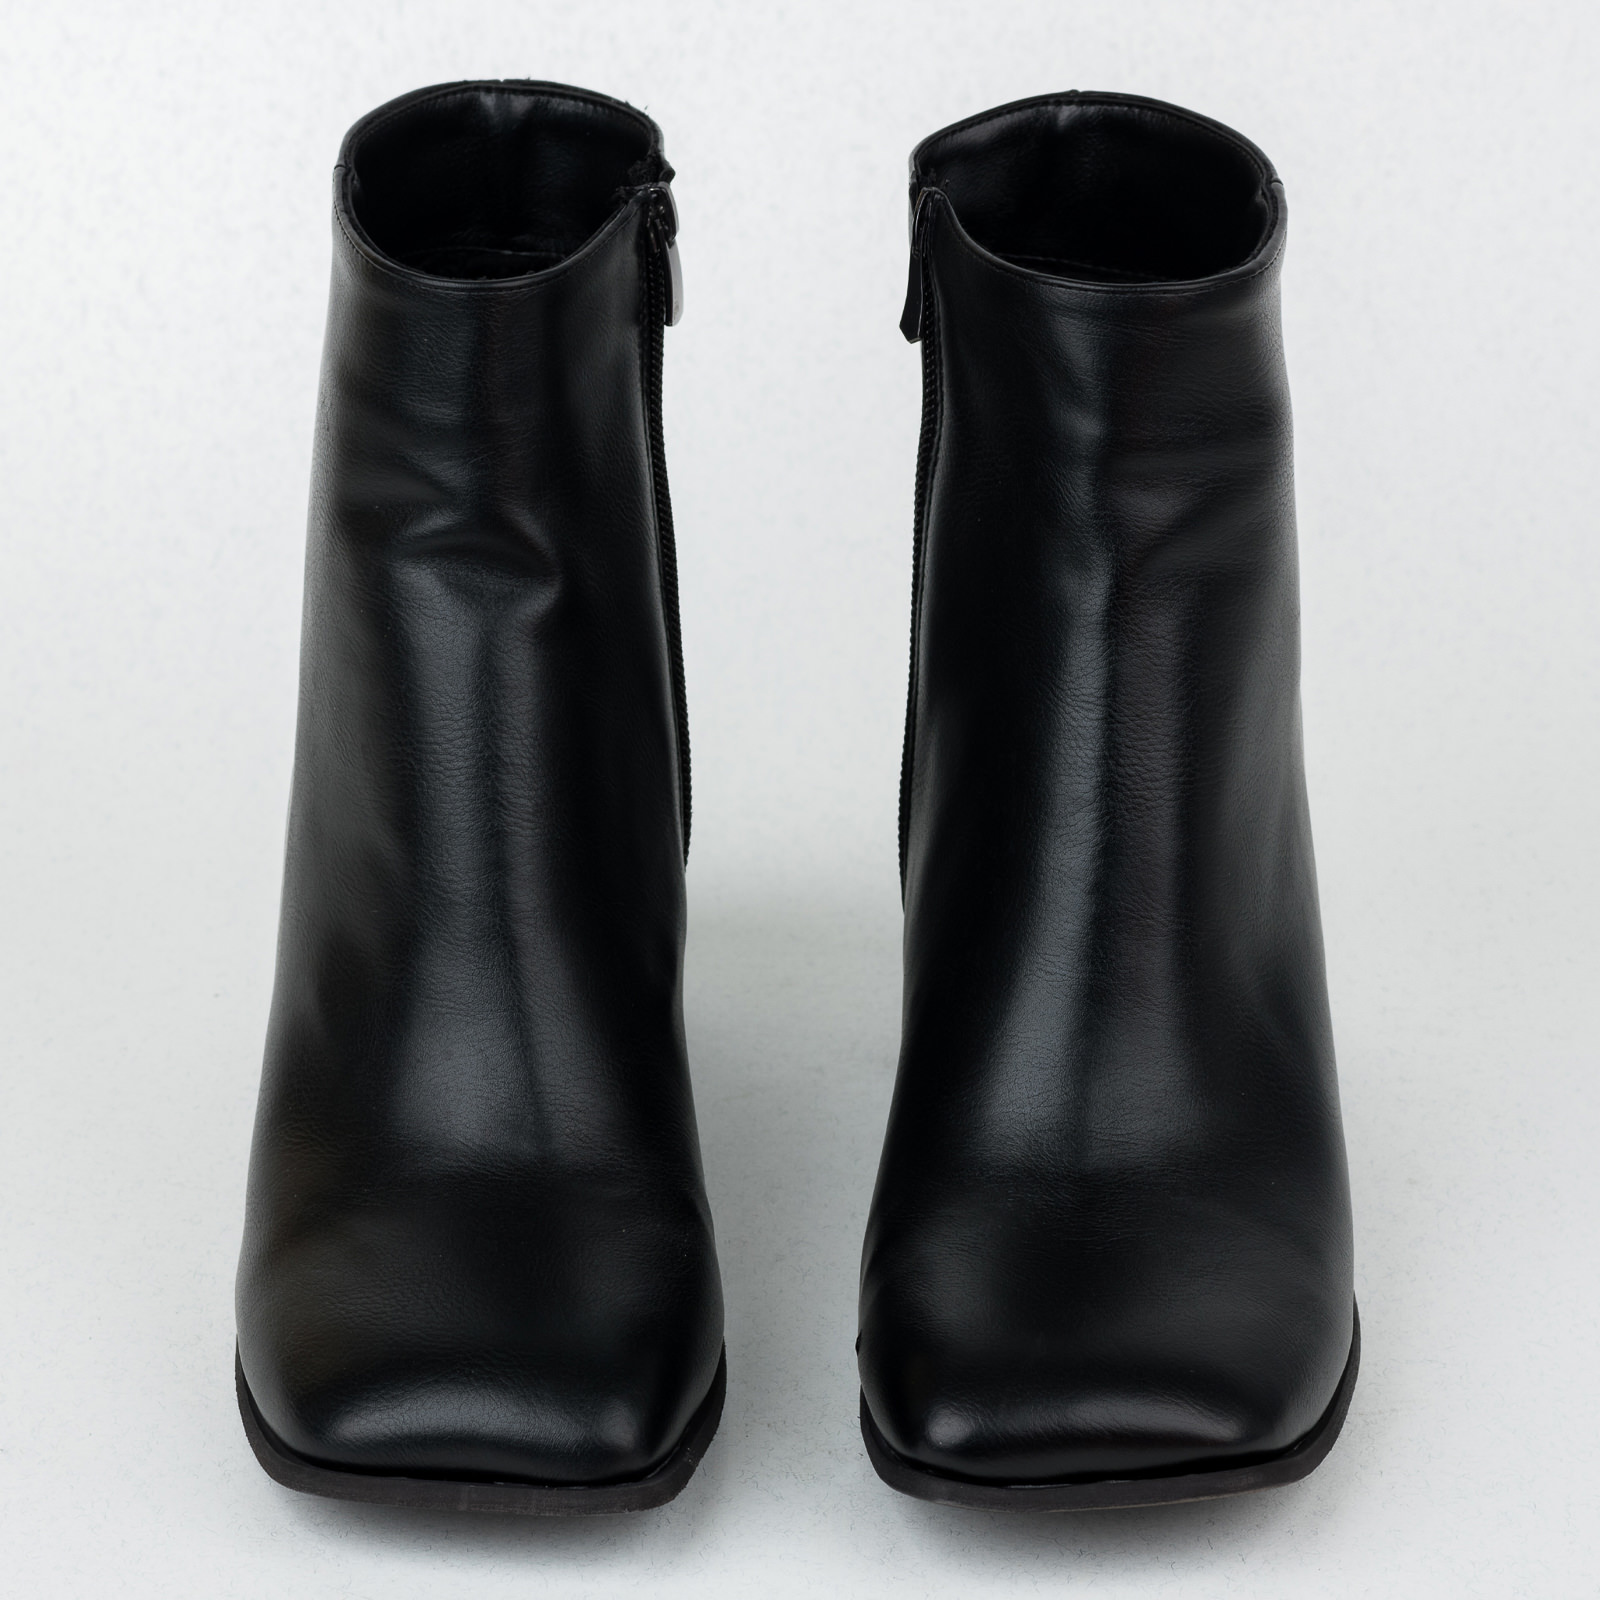 Women ankle boots B503 - BLACK